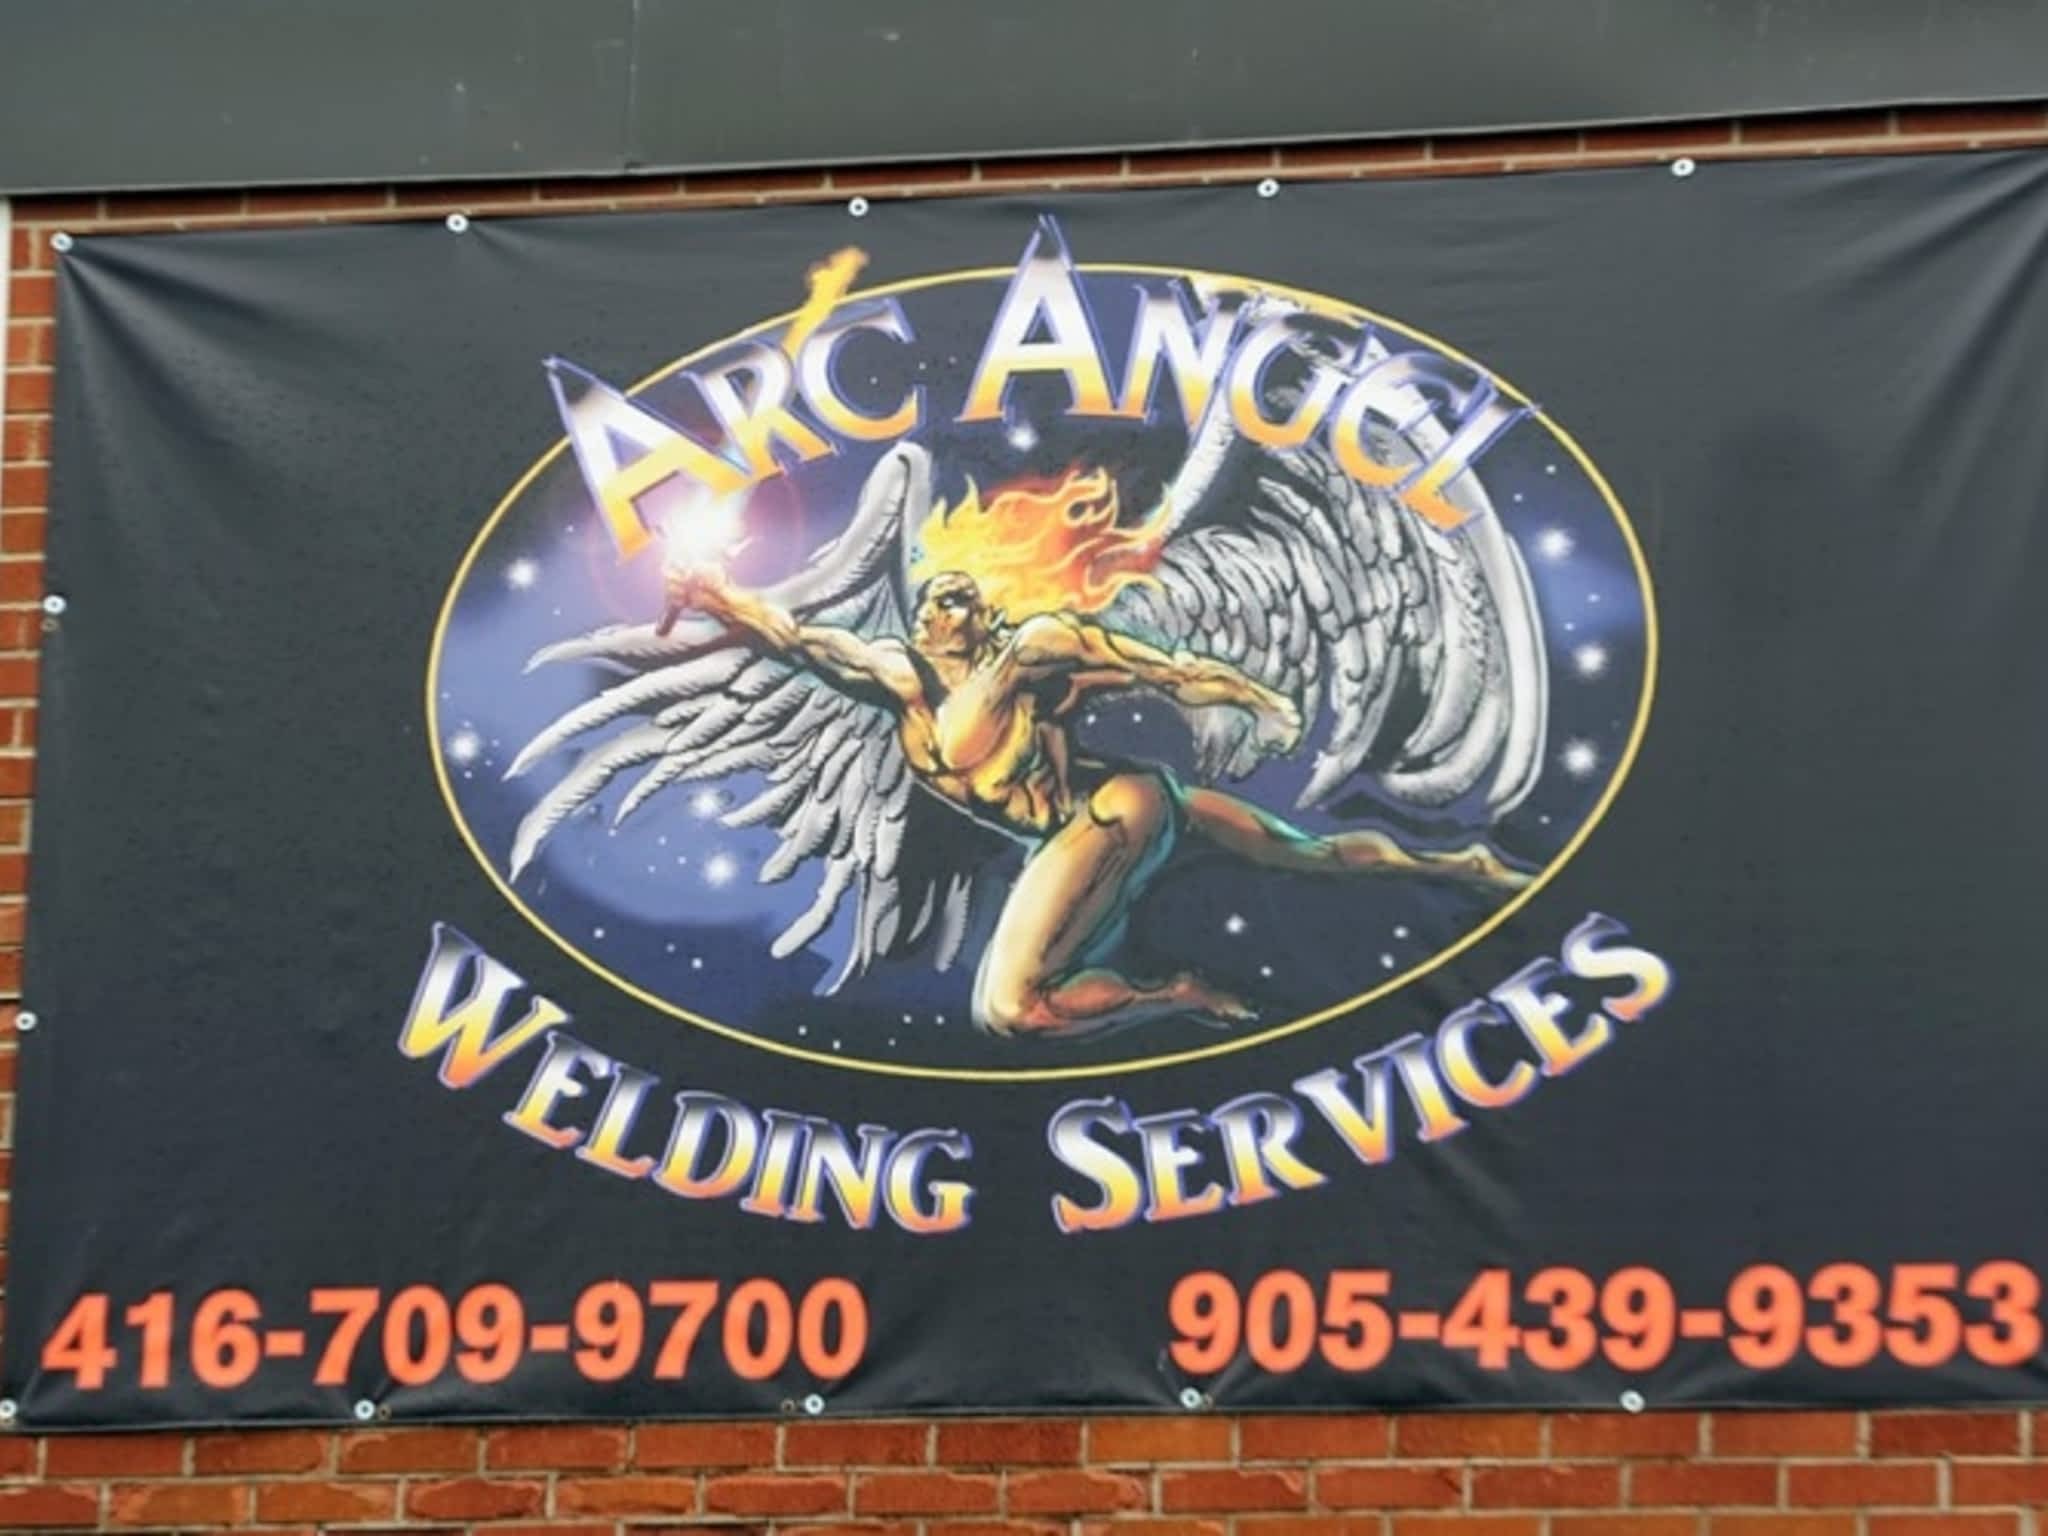 photo Arc Angel Welding Service